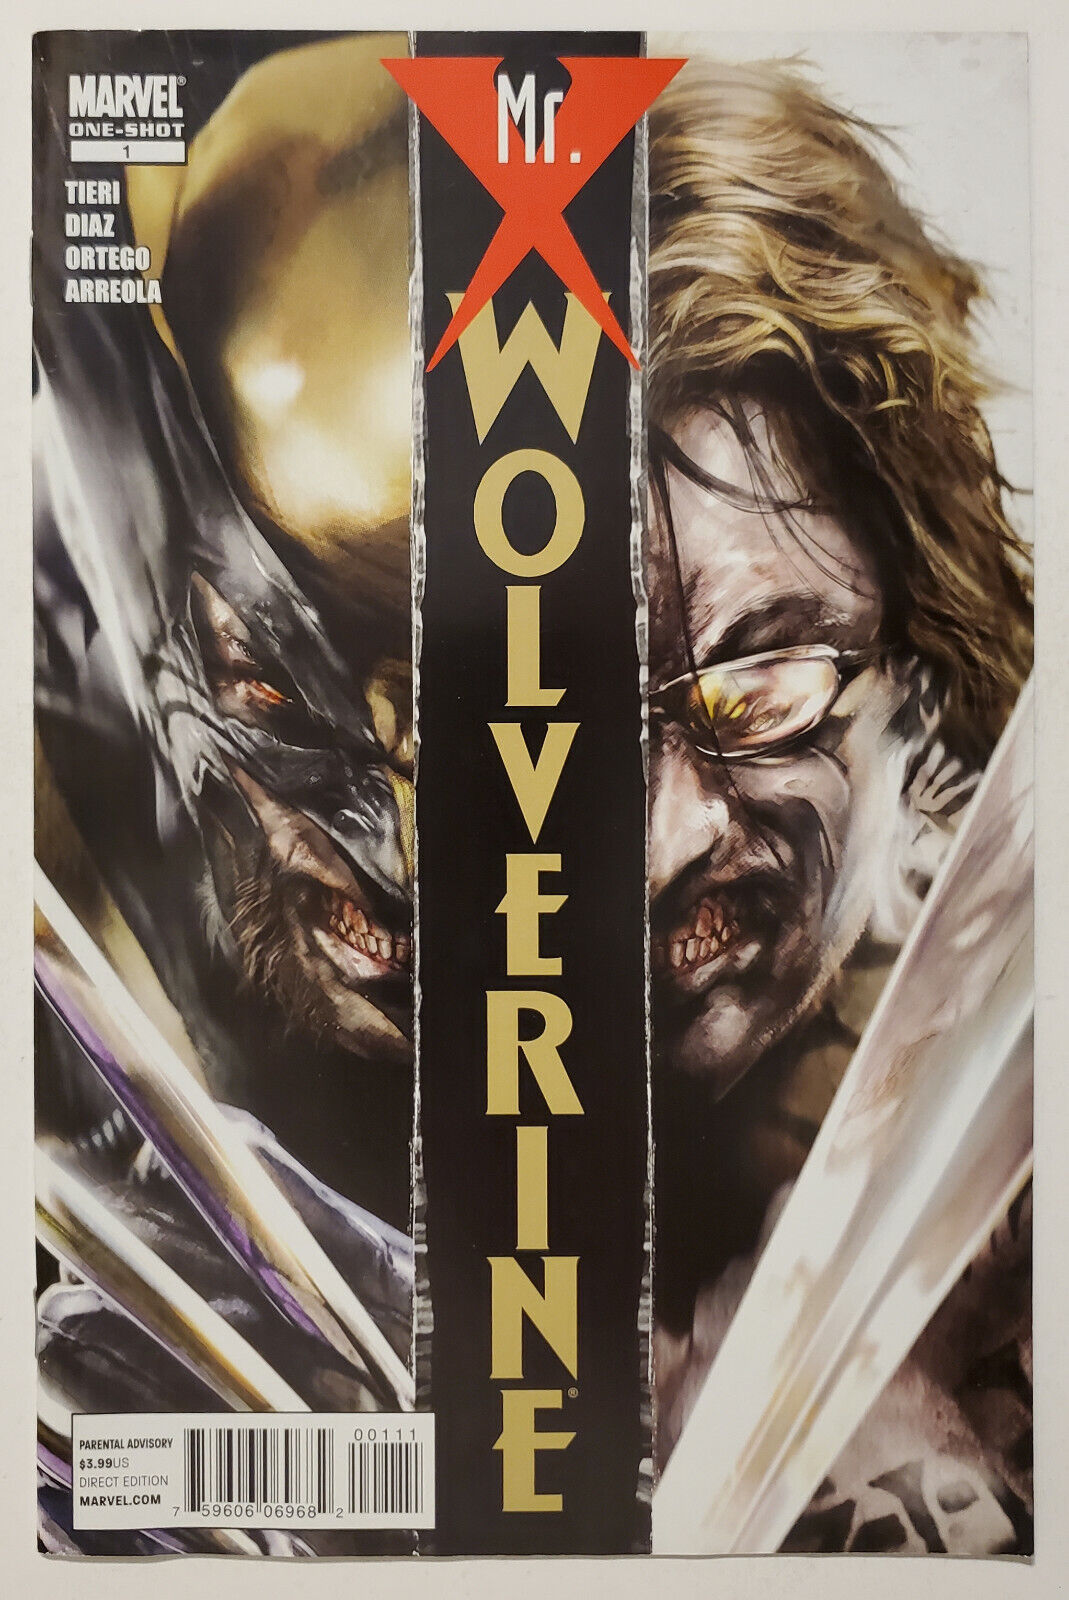 Wolverine: Mr. X #1 (2010, Marvel) VF- Francesco Mattina Cover